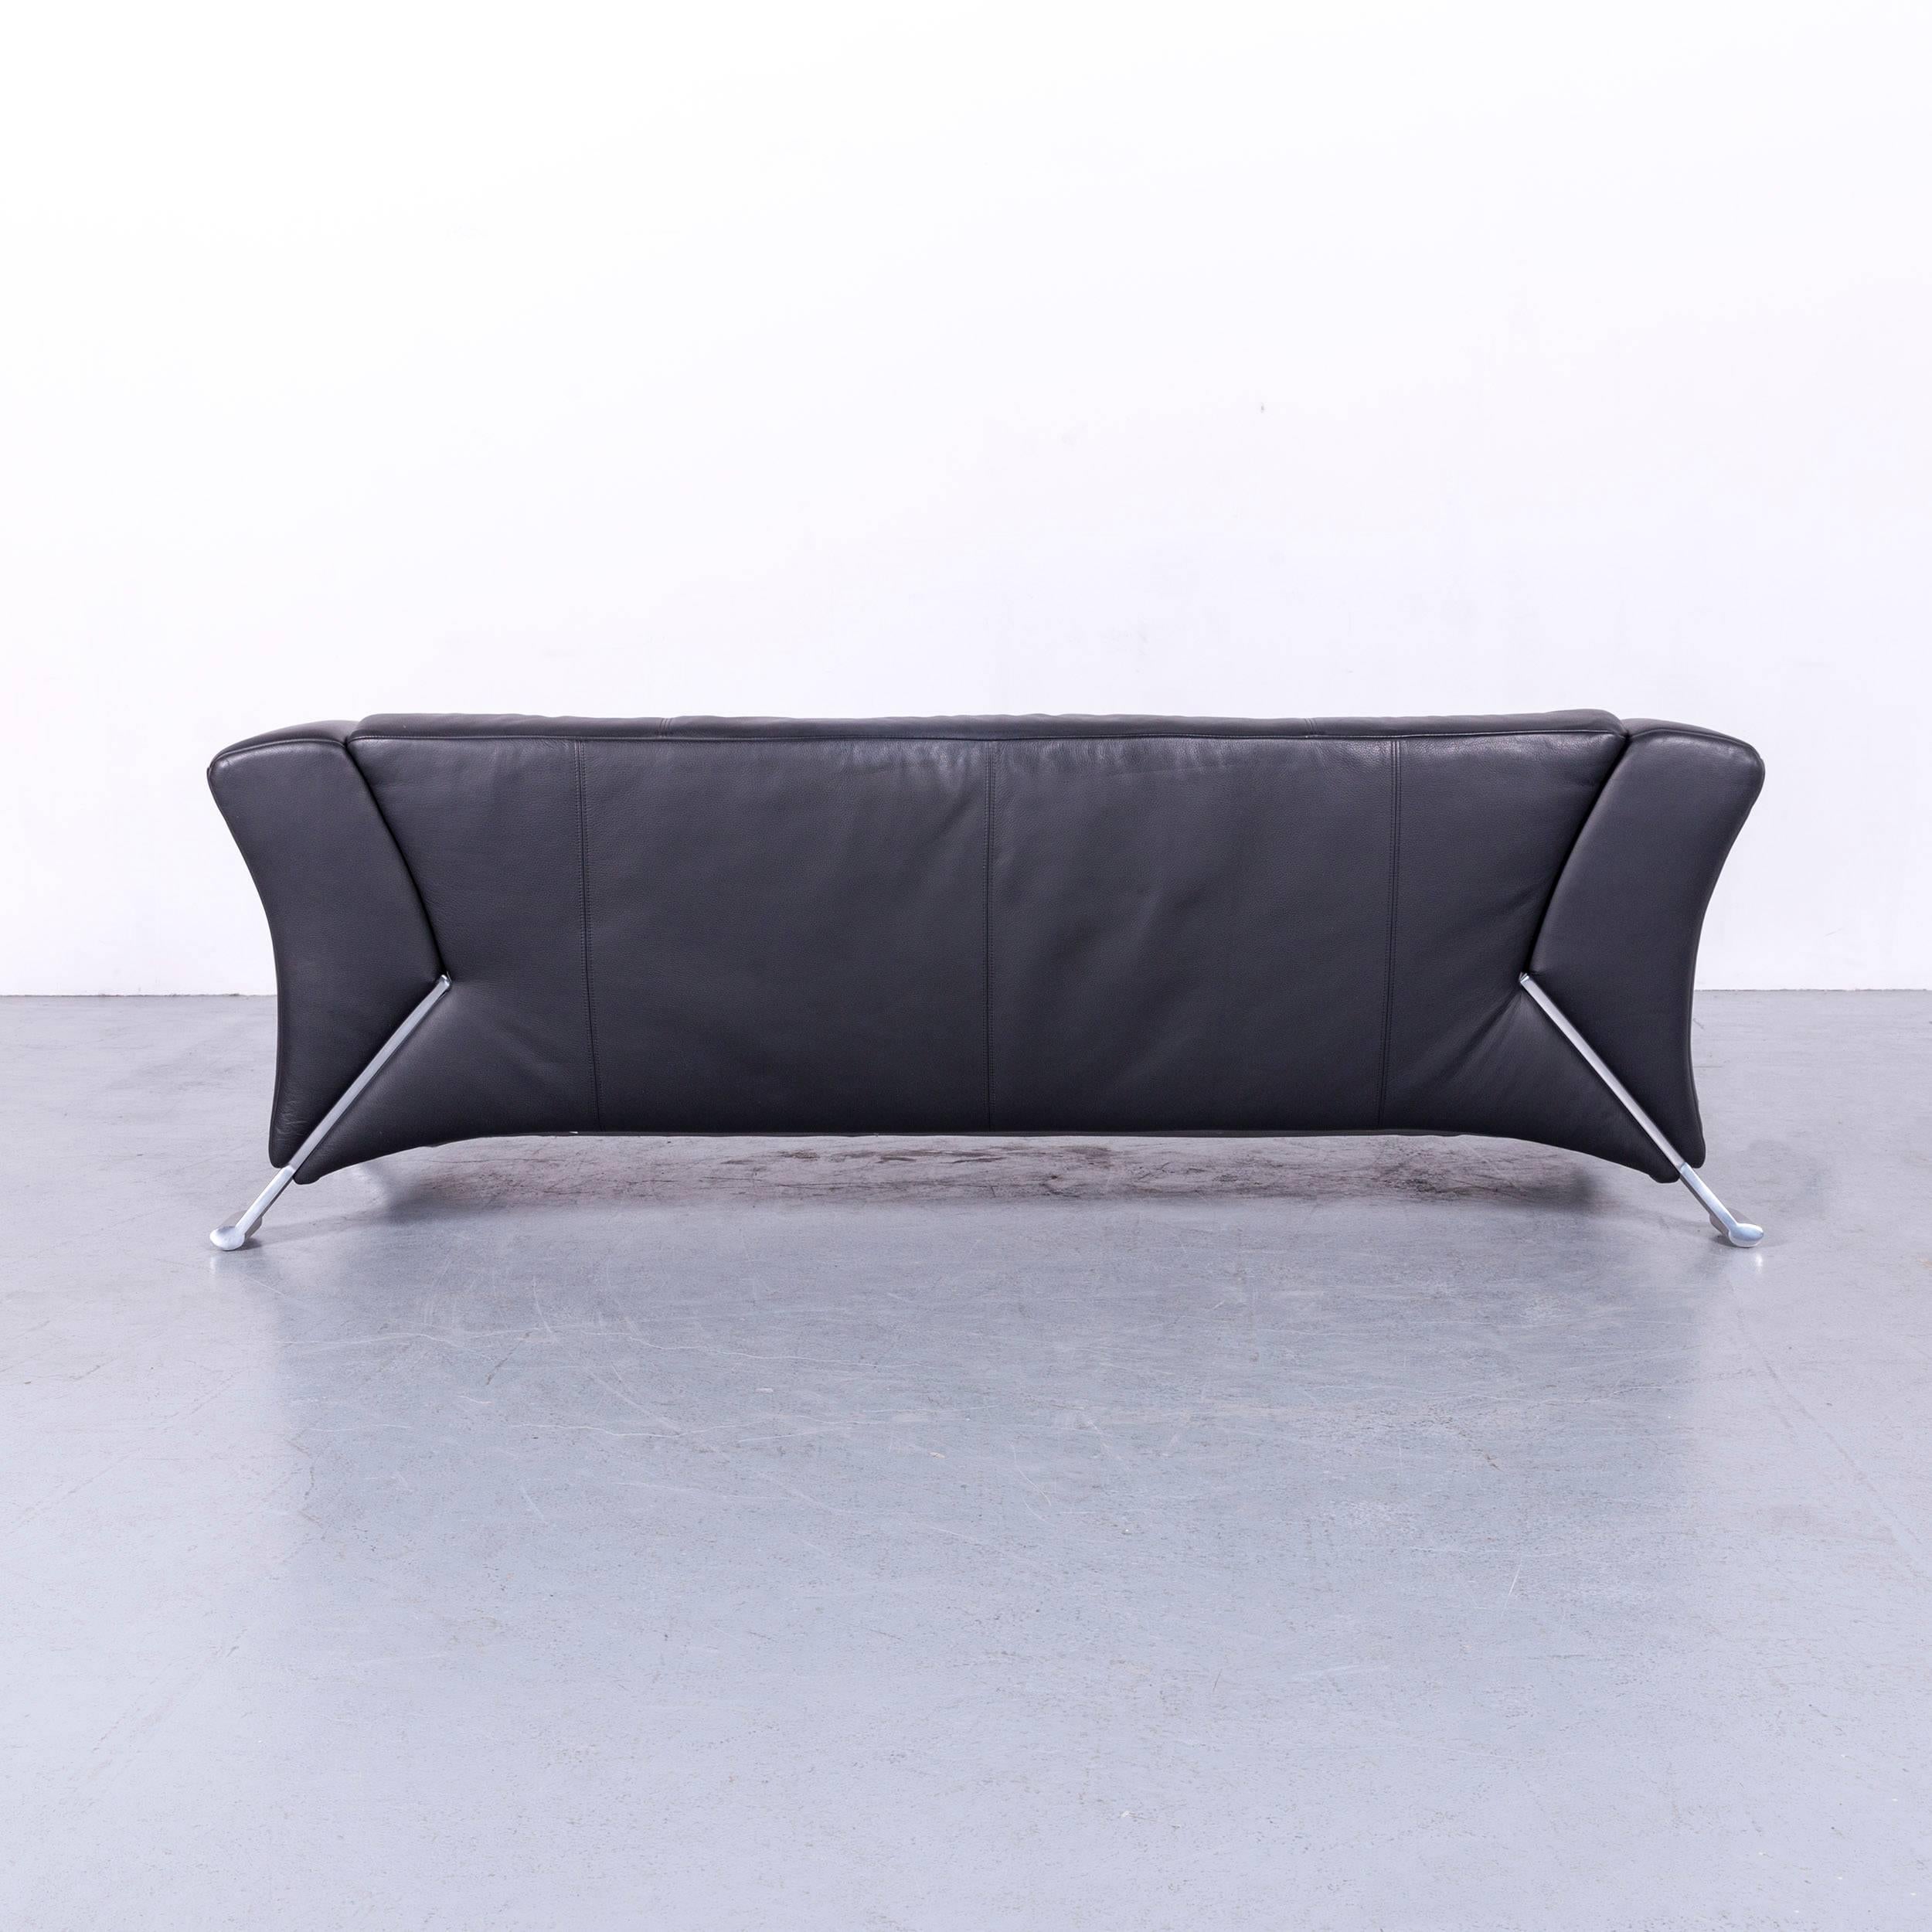 Rolf Benz 322 Designer Sofa Black Three-Seat Leather Modern Couch Metal Feet 3